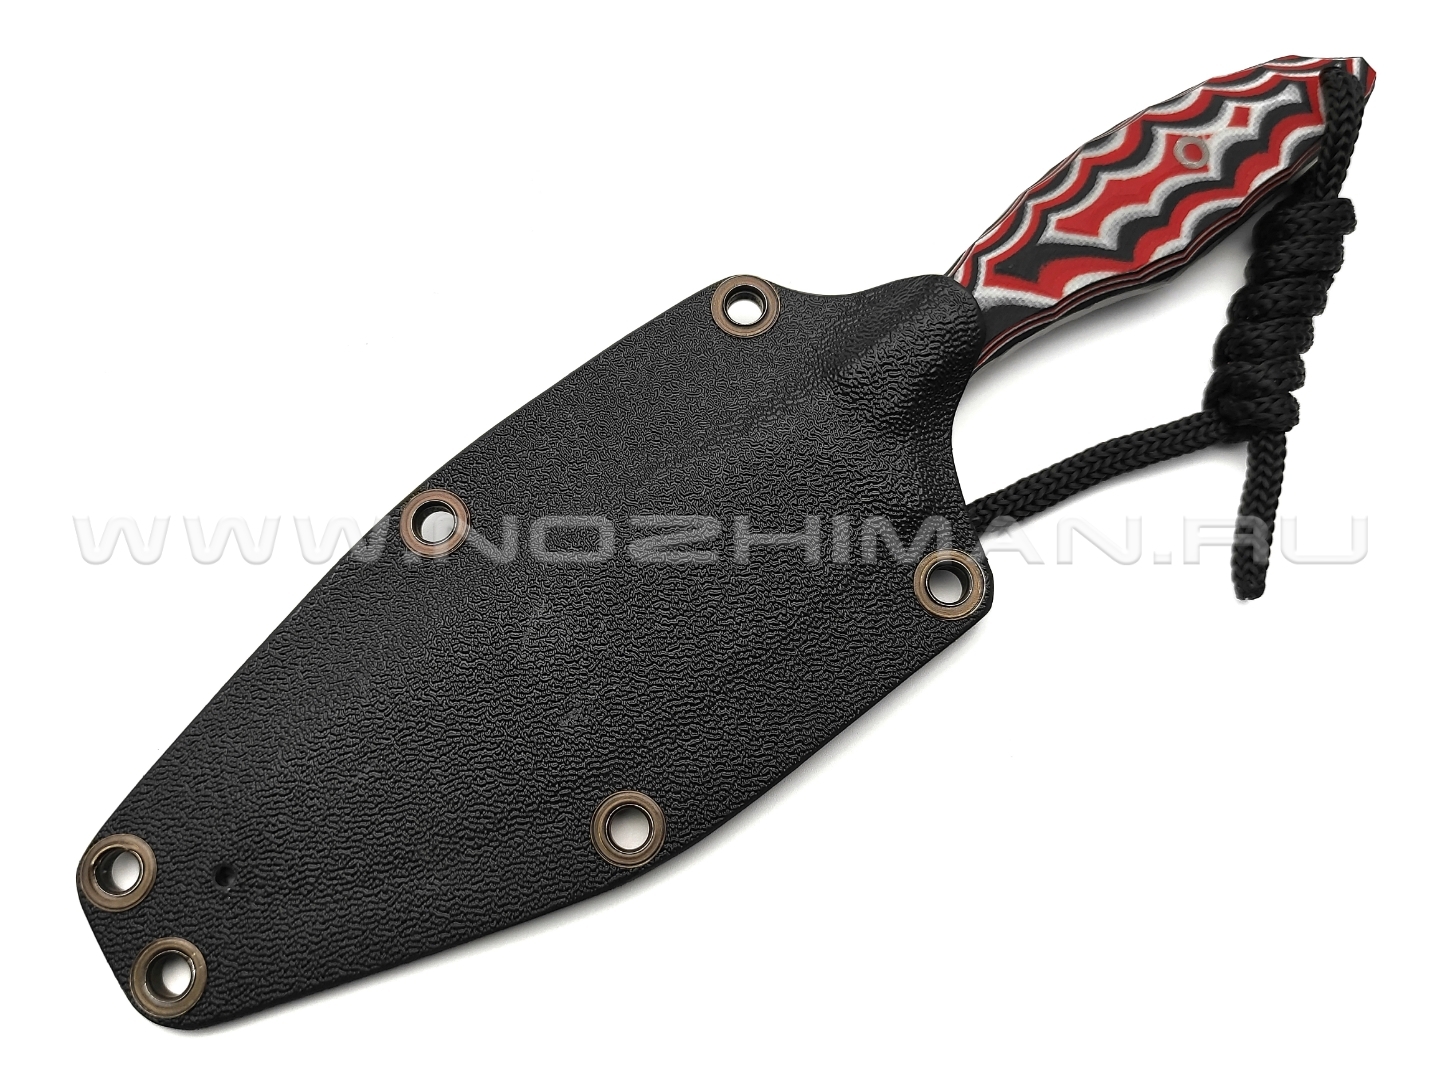 Андрей Кулаков нож KUL003 сталь 95Х18 пескоструй, рукоять G10 black-red & white